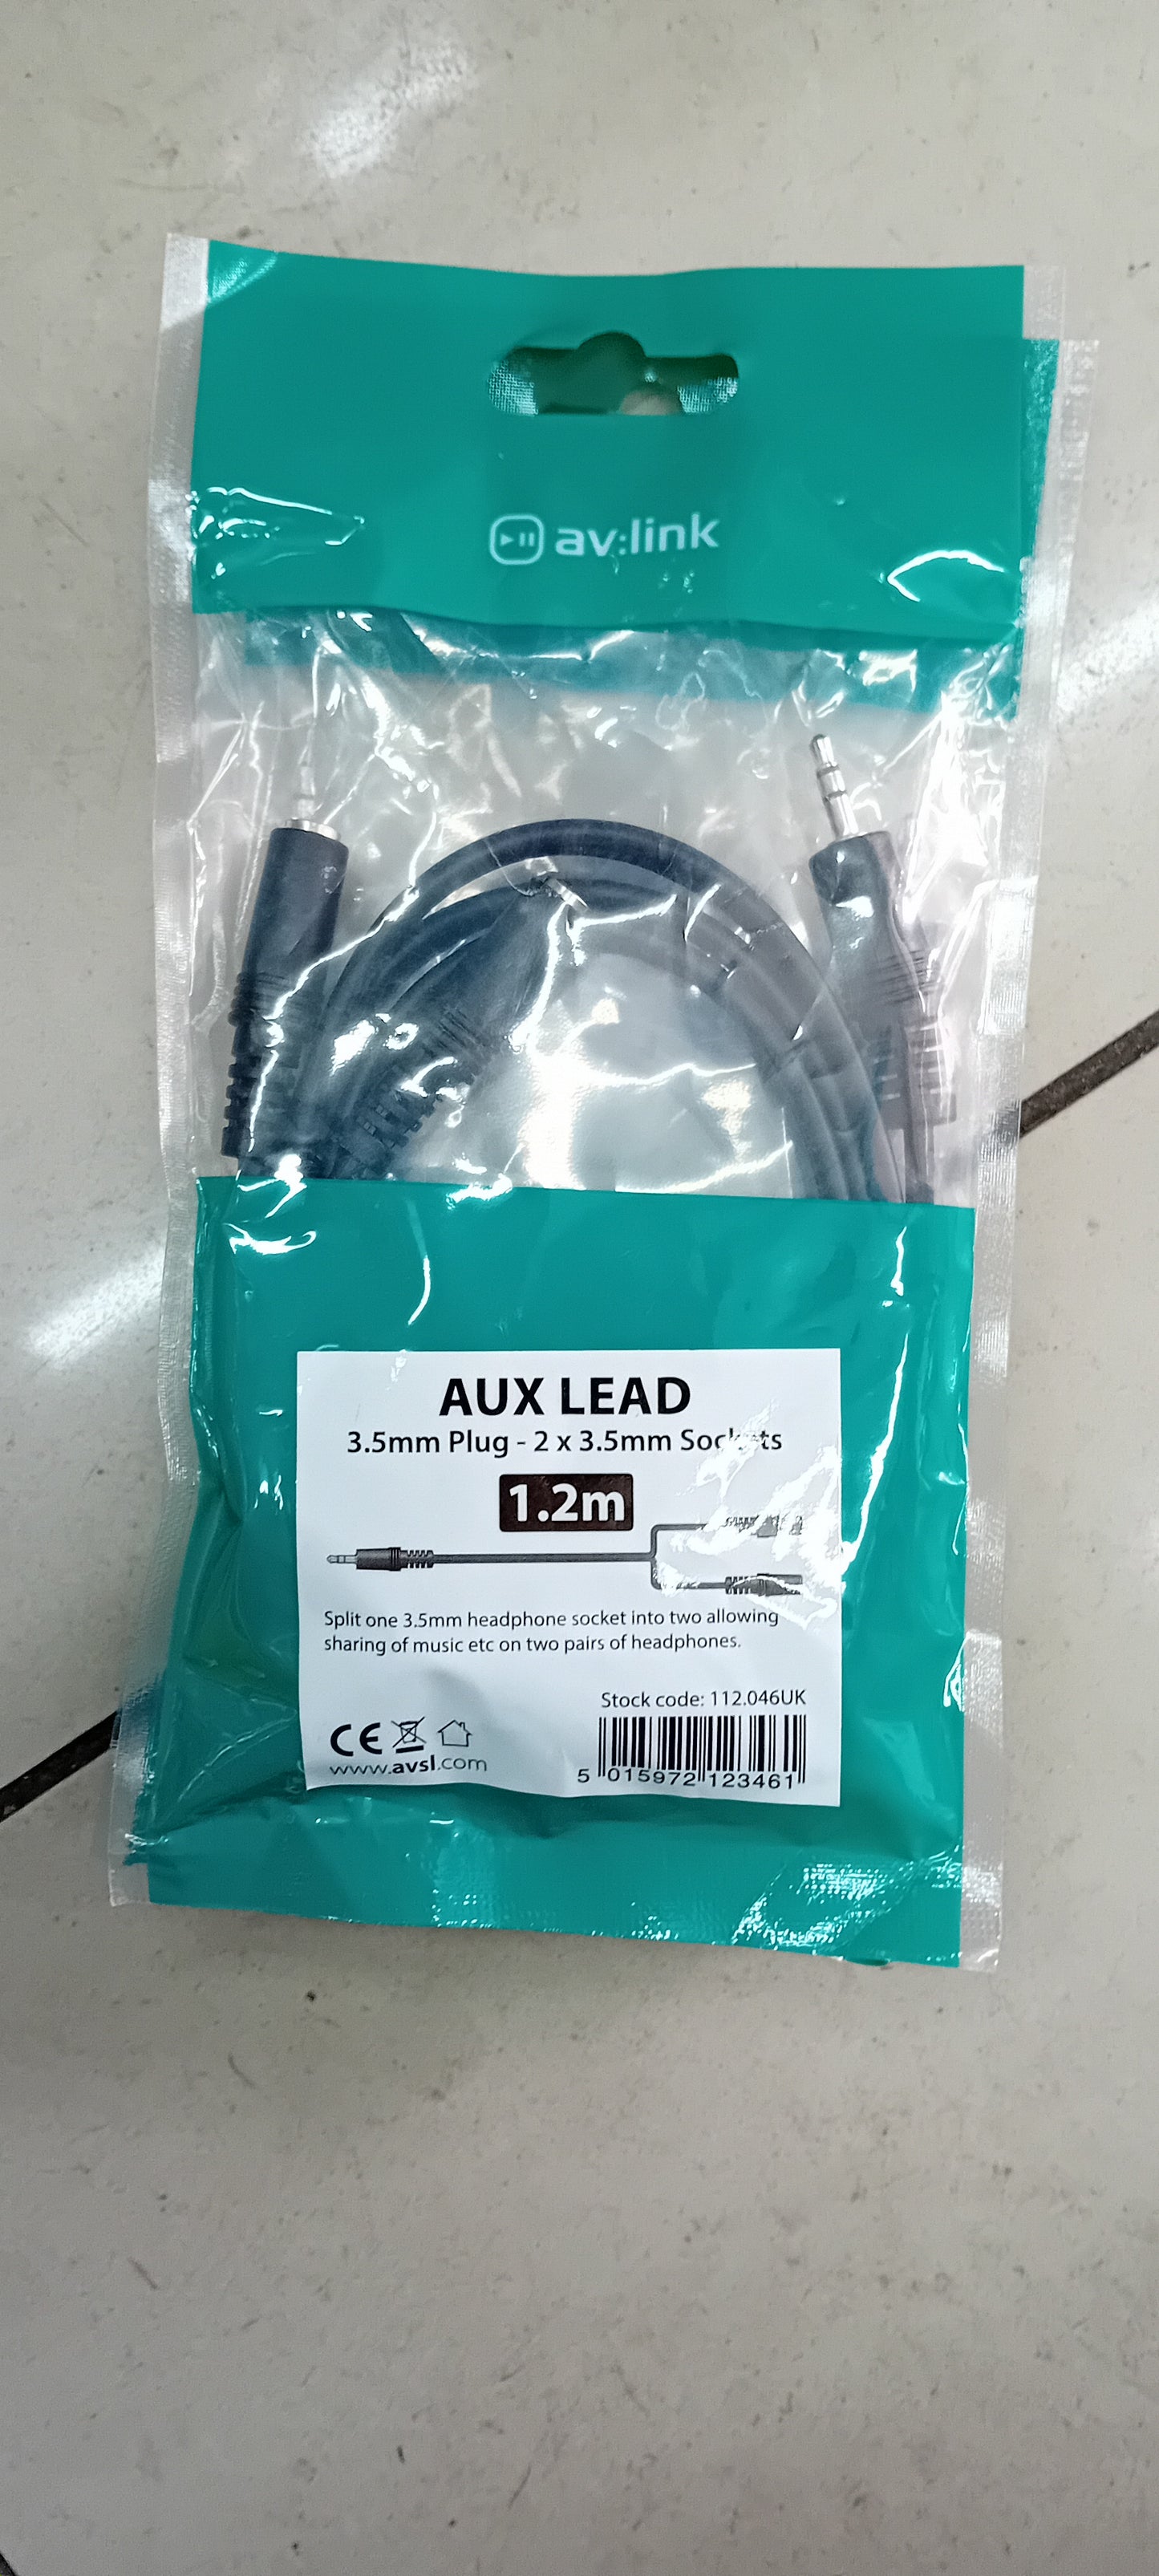 Aux lead 3.5mm plug 2×3.5mm sockets